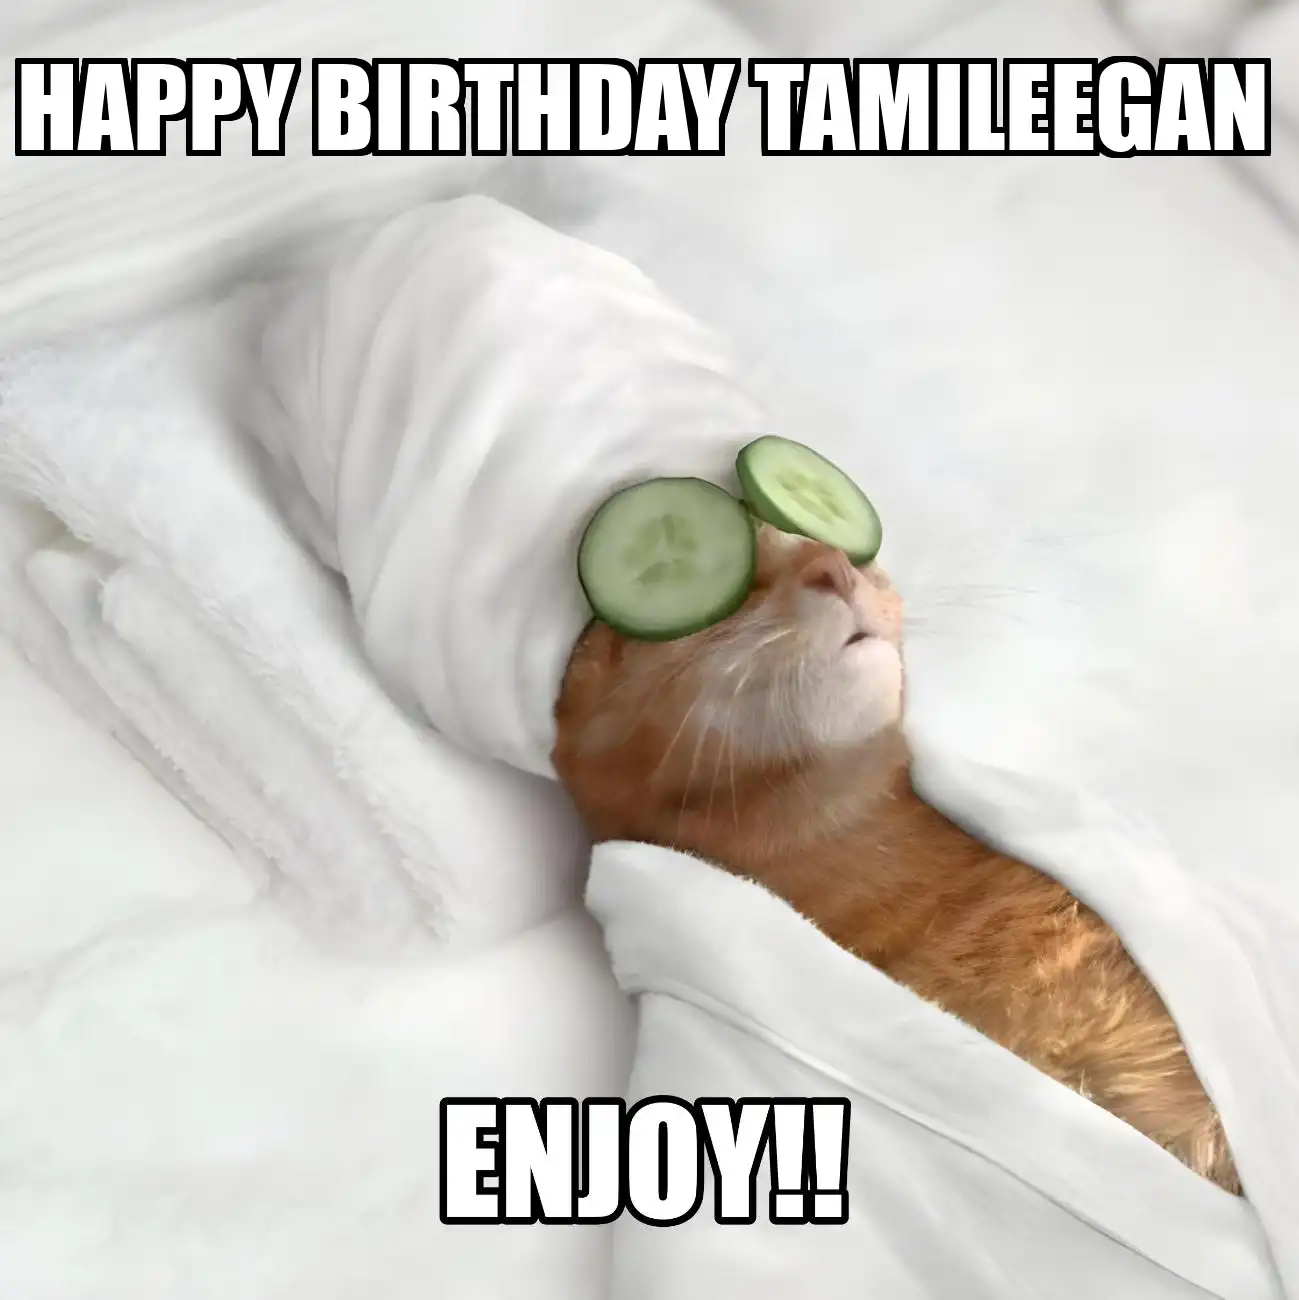 Happy Birthday Tamileegan Enjoy Cat Meme